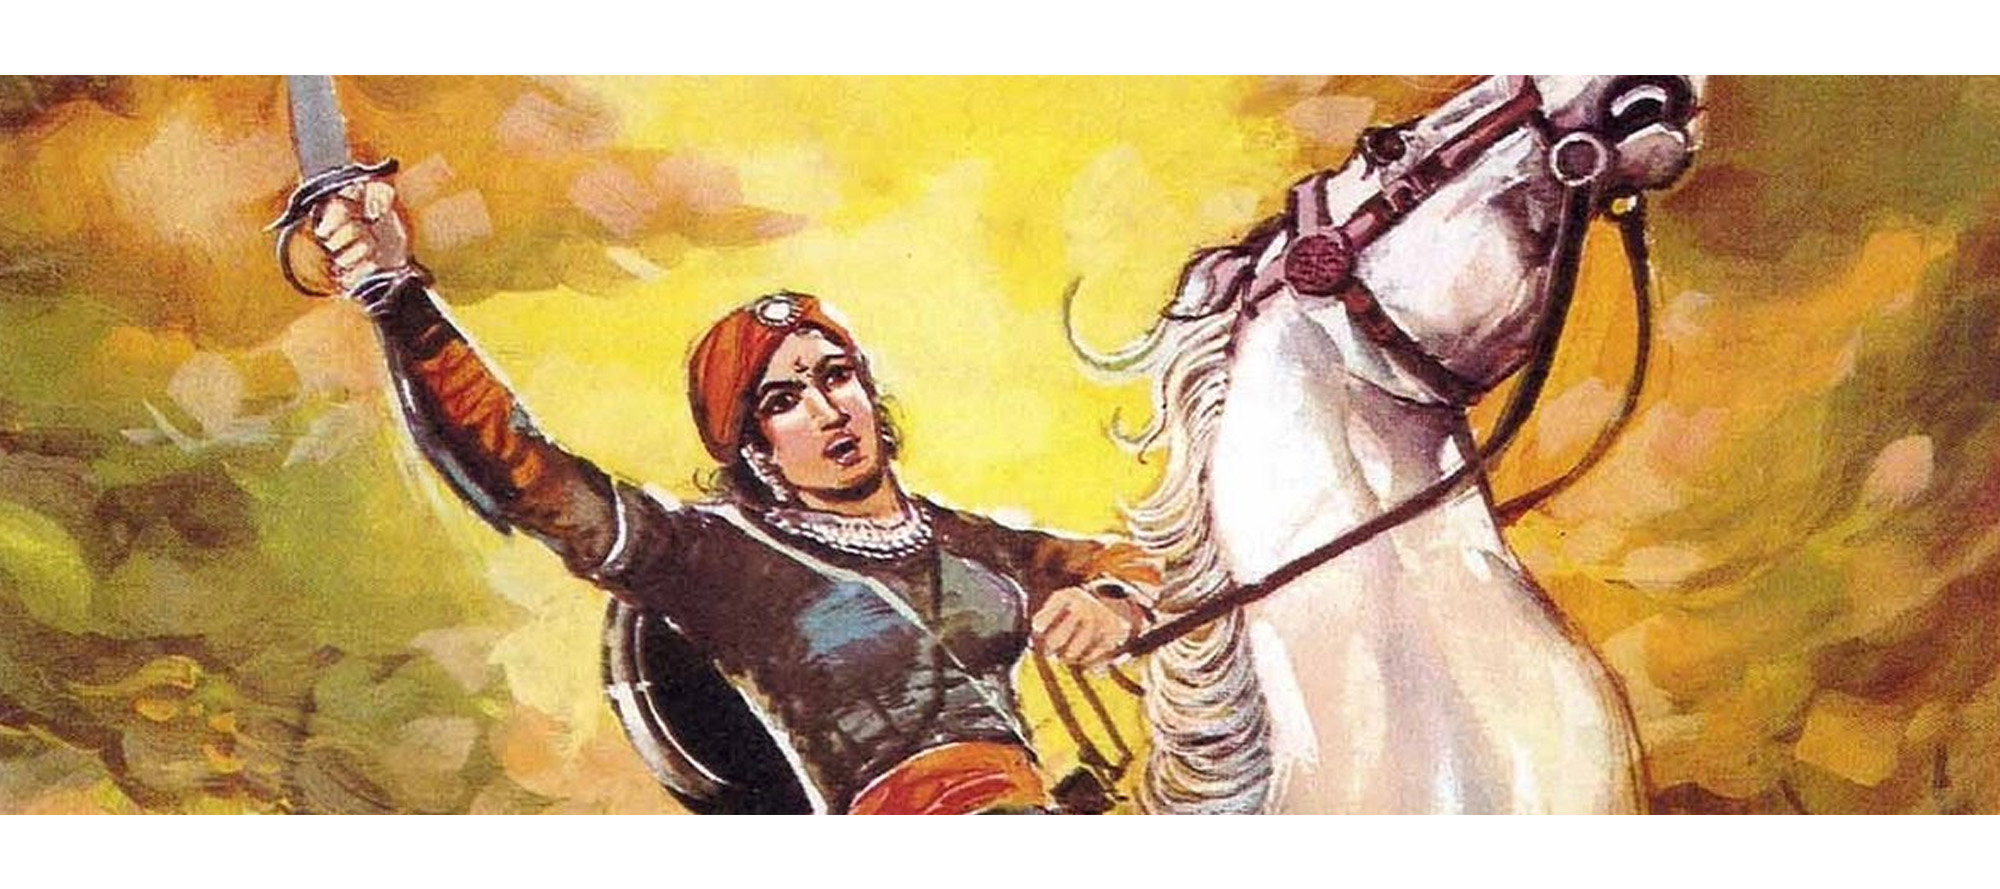 Rani of Jhansi — The Warrior Queen of Jhansi